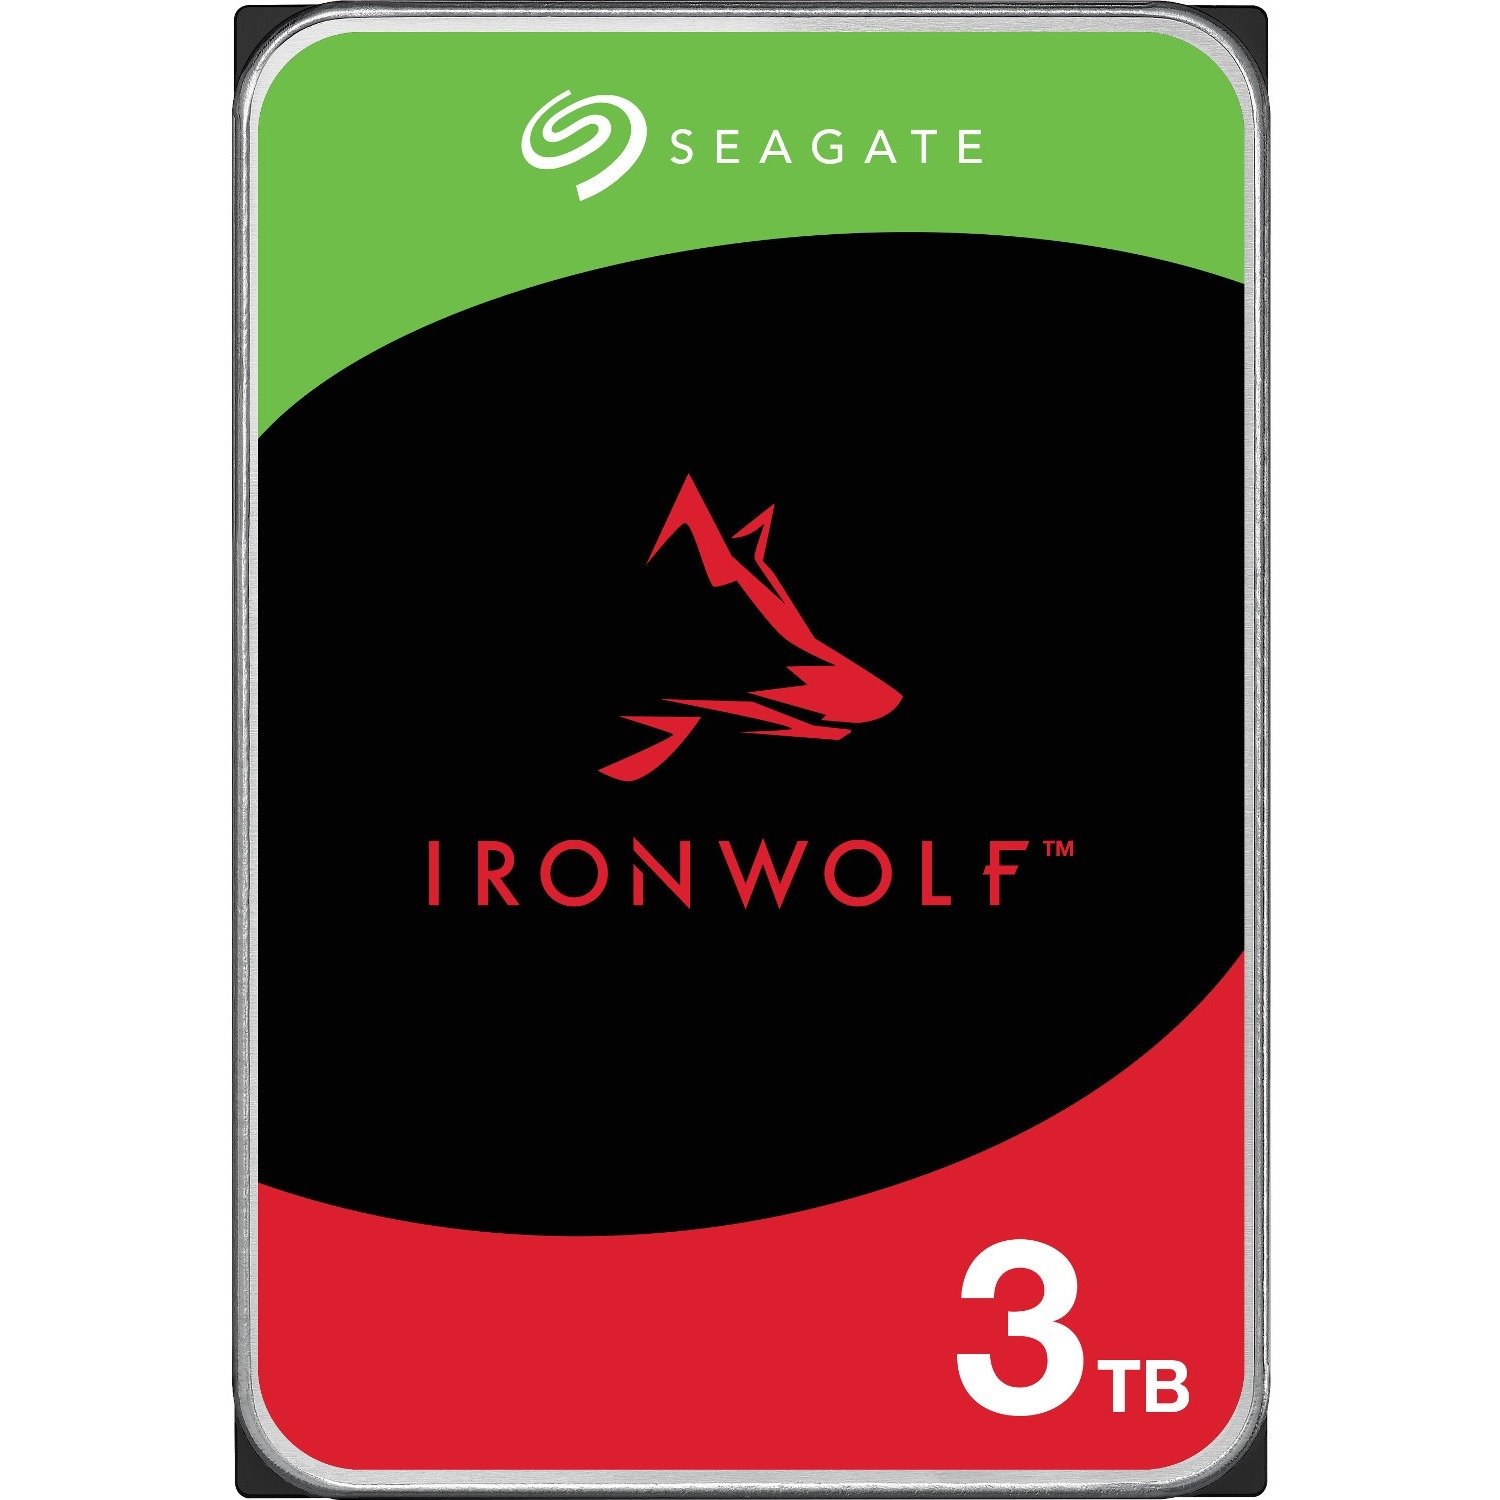 Seagate IronWolf ST3000VN006 3 TB Hard Drive - 3.5" Internal - SATA (SATA/600) - Conventional Magnetic Recording (CMR) Method